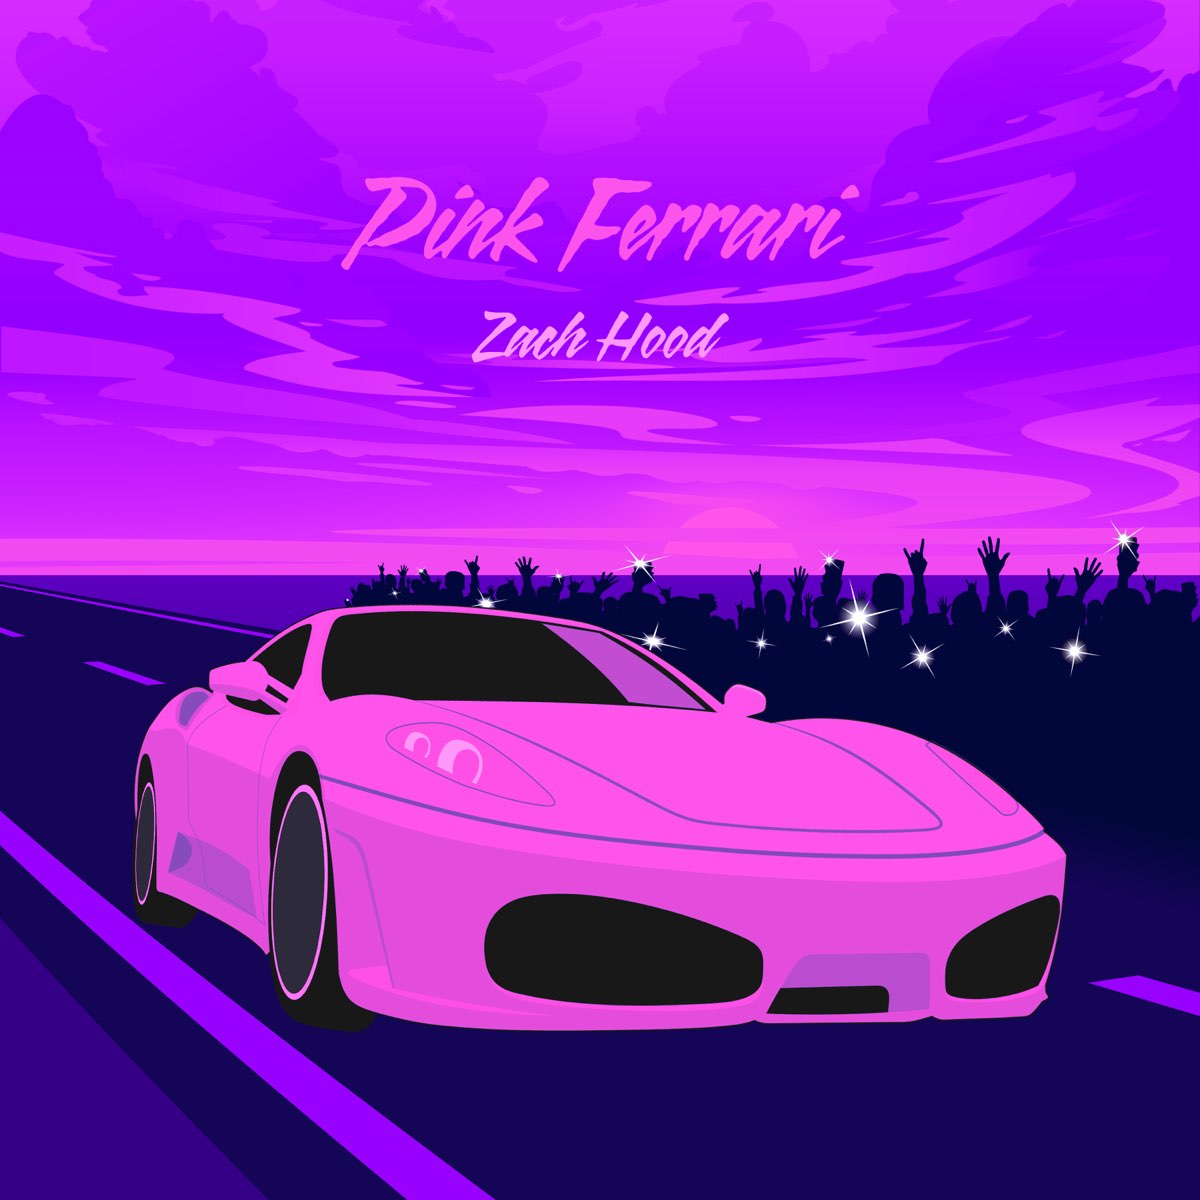 Pink Ferrari - Single - Album by Zach Hood - Apple Music